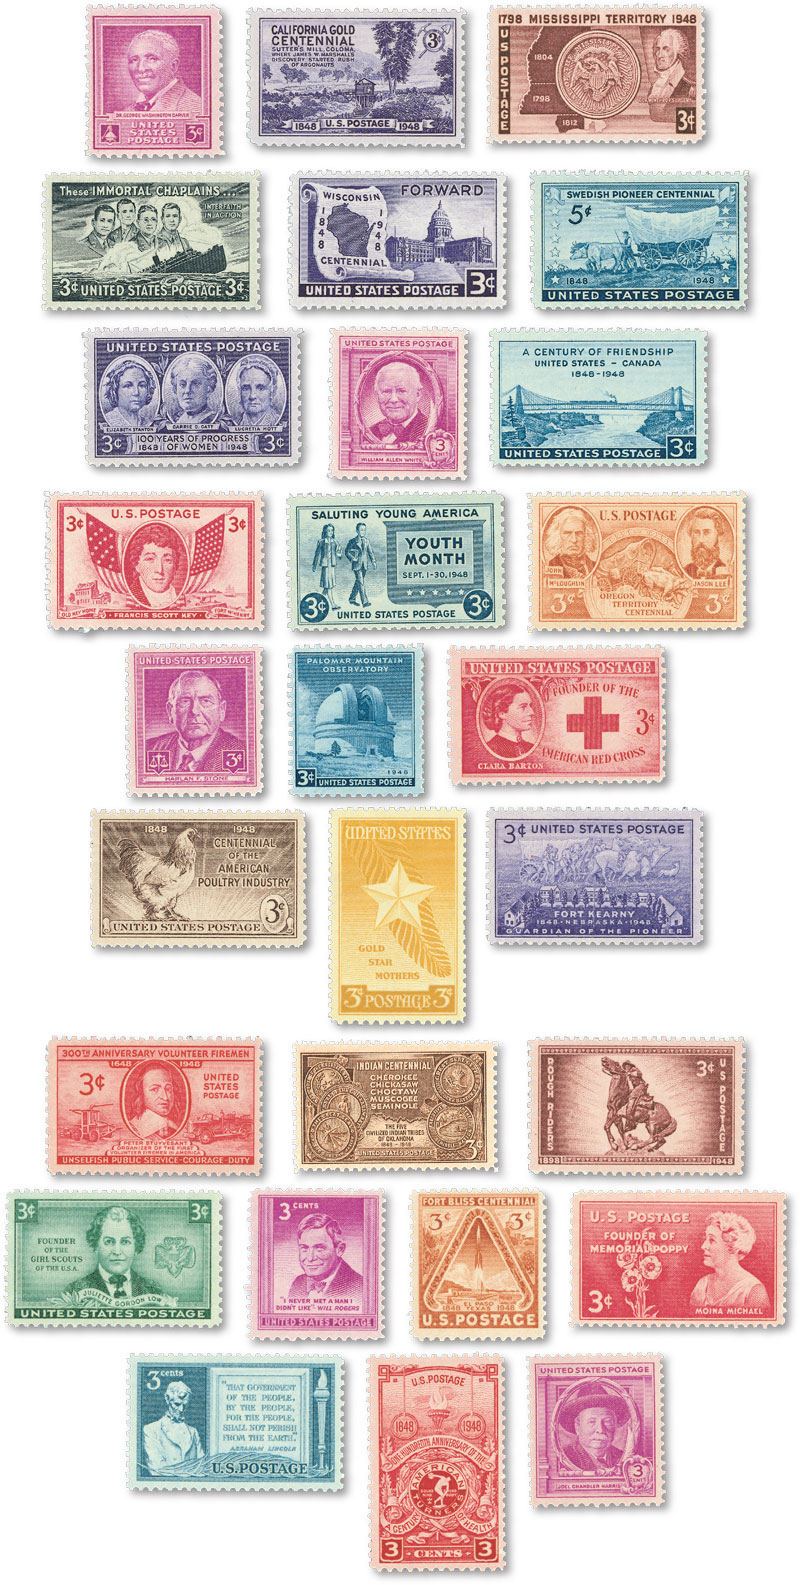 YS1948 - 1948 Commemorative Stamp Year Set